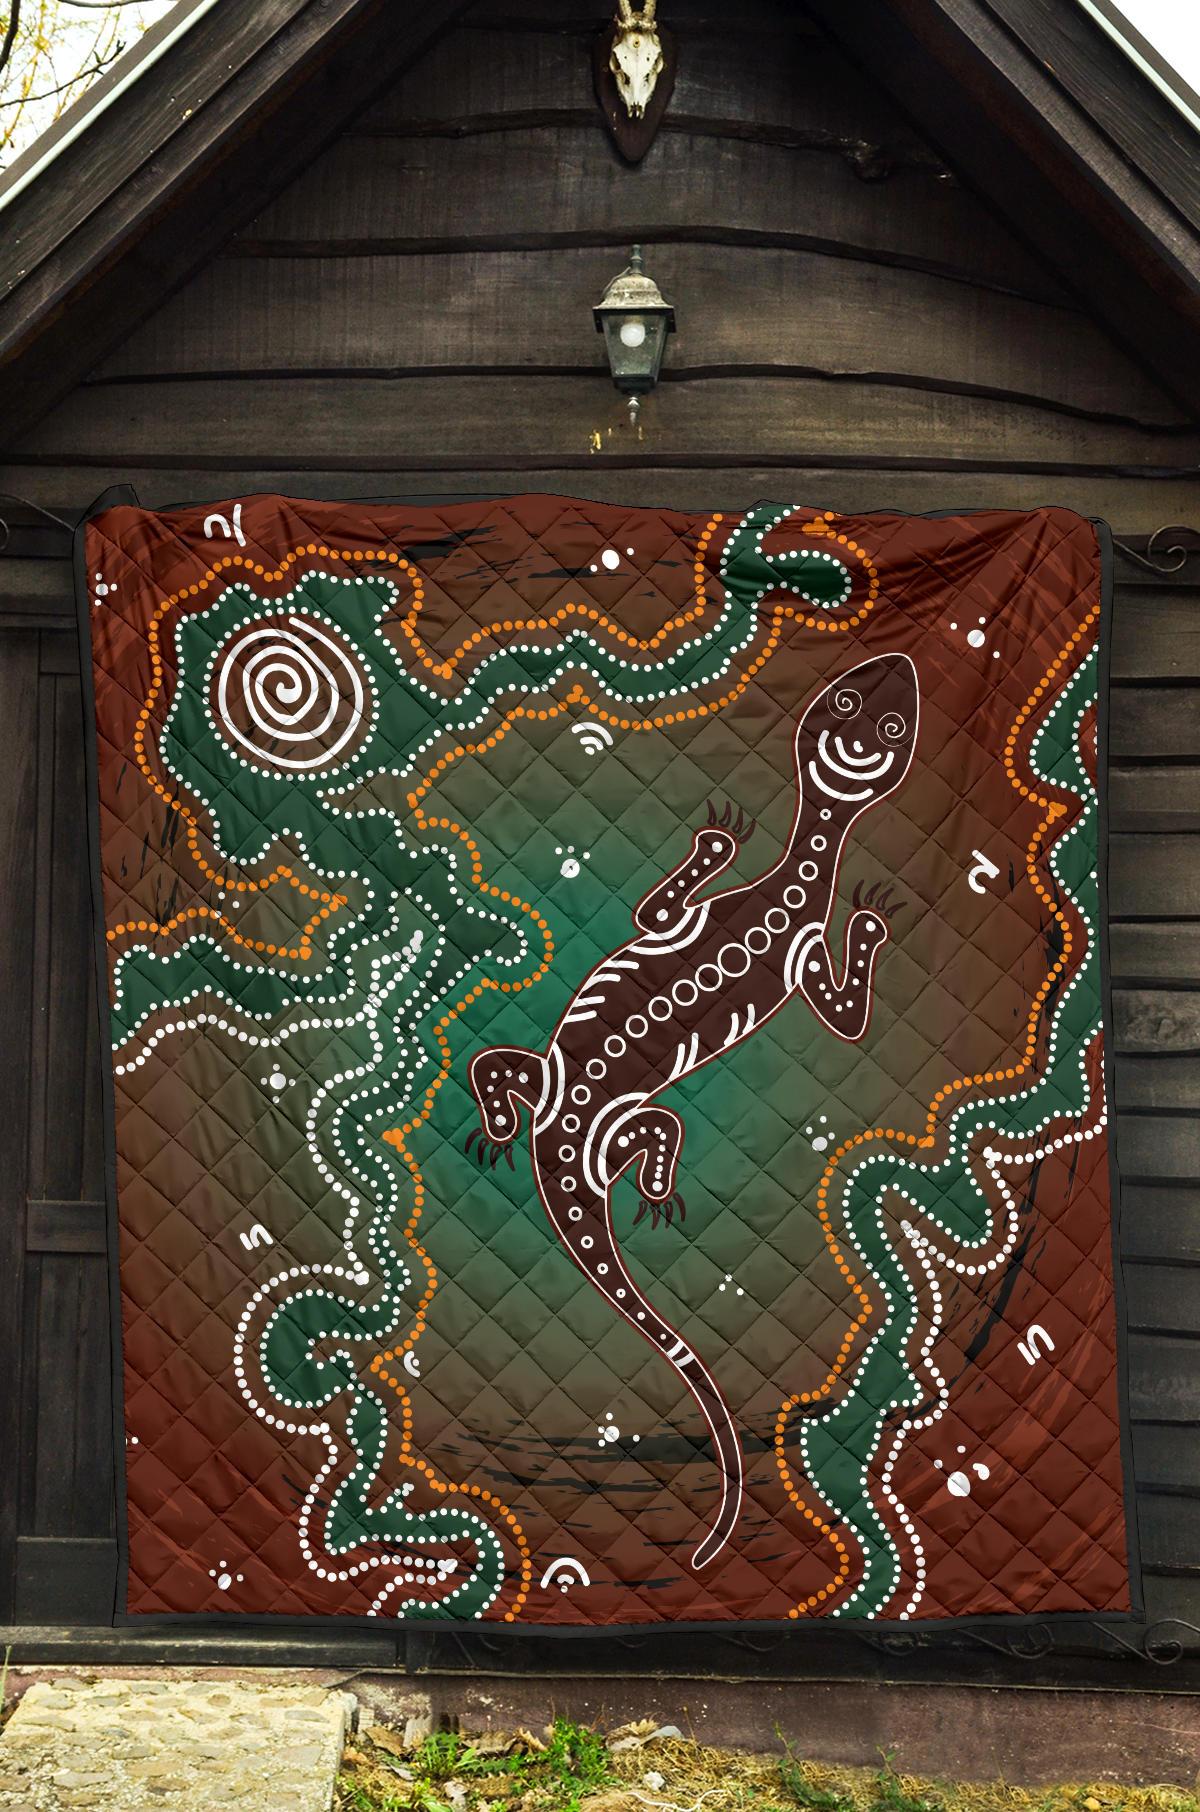 Aboriginal Premium Quilt - Australia Lizard Brown Dot Painting Art